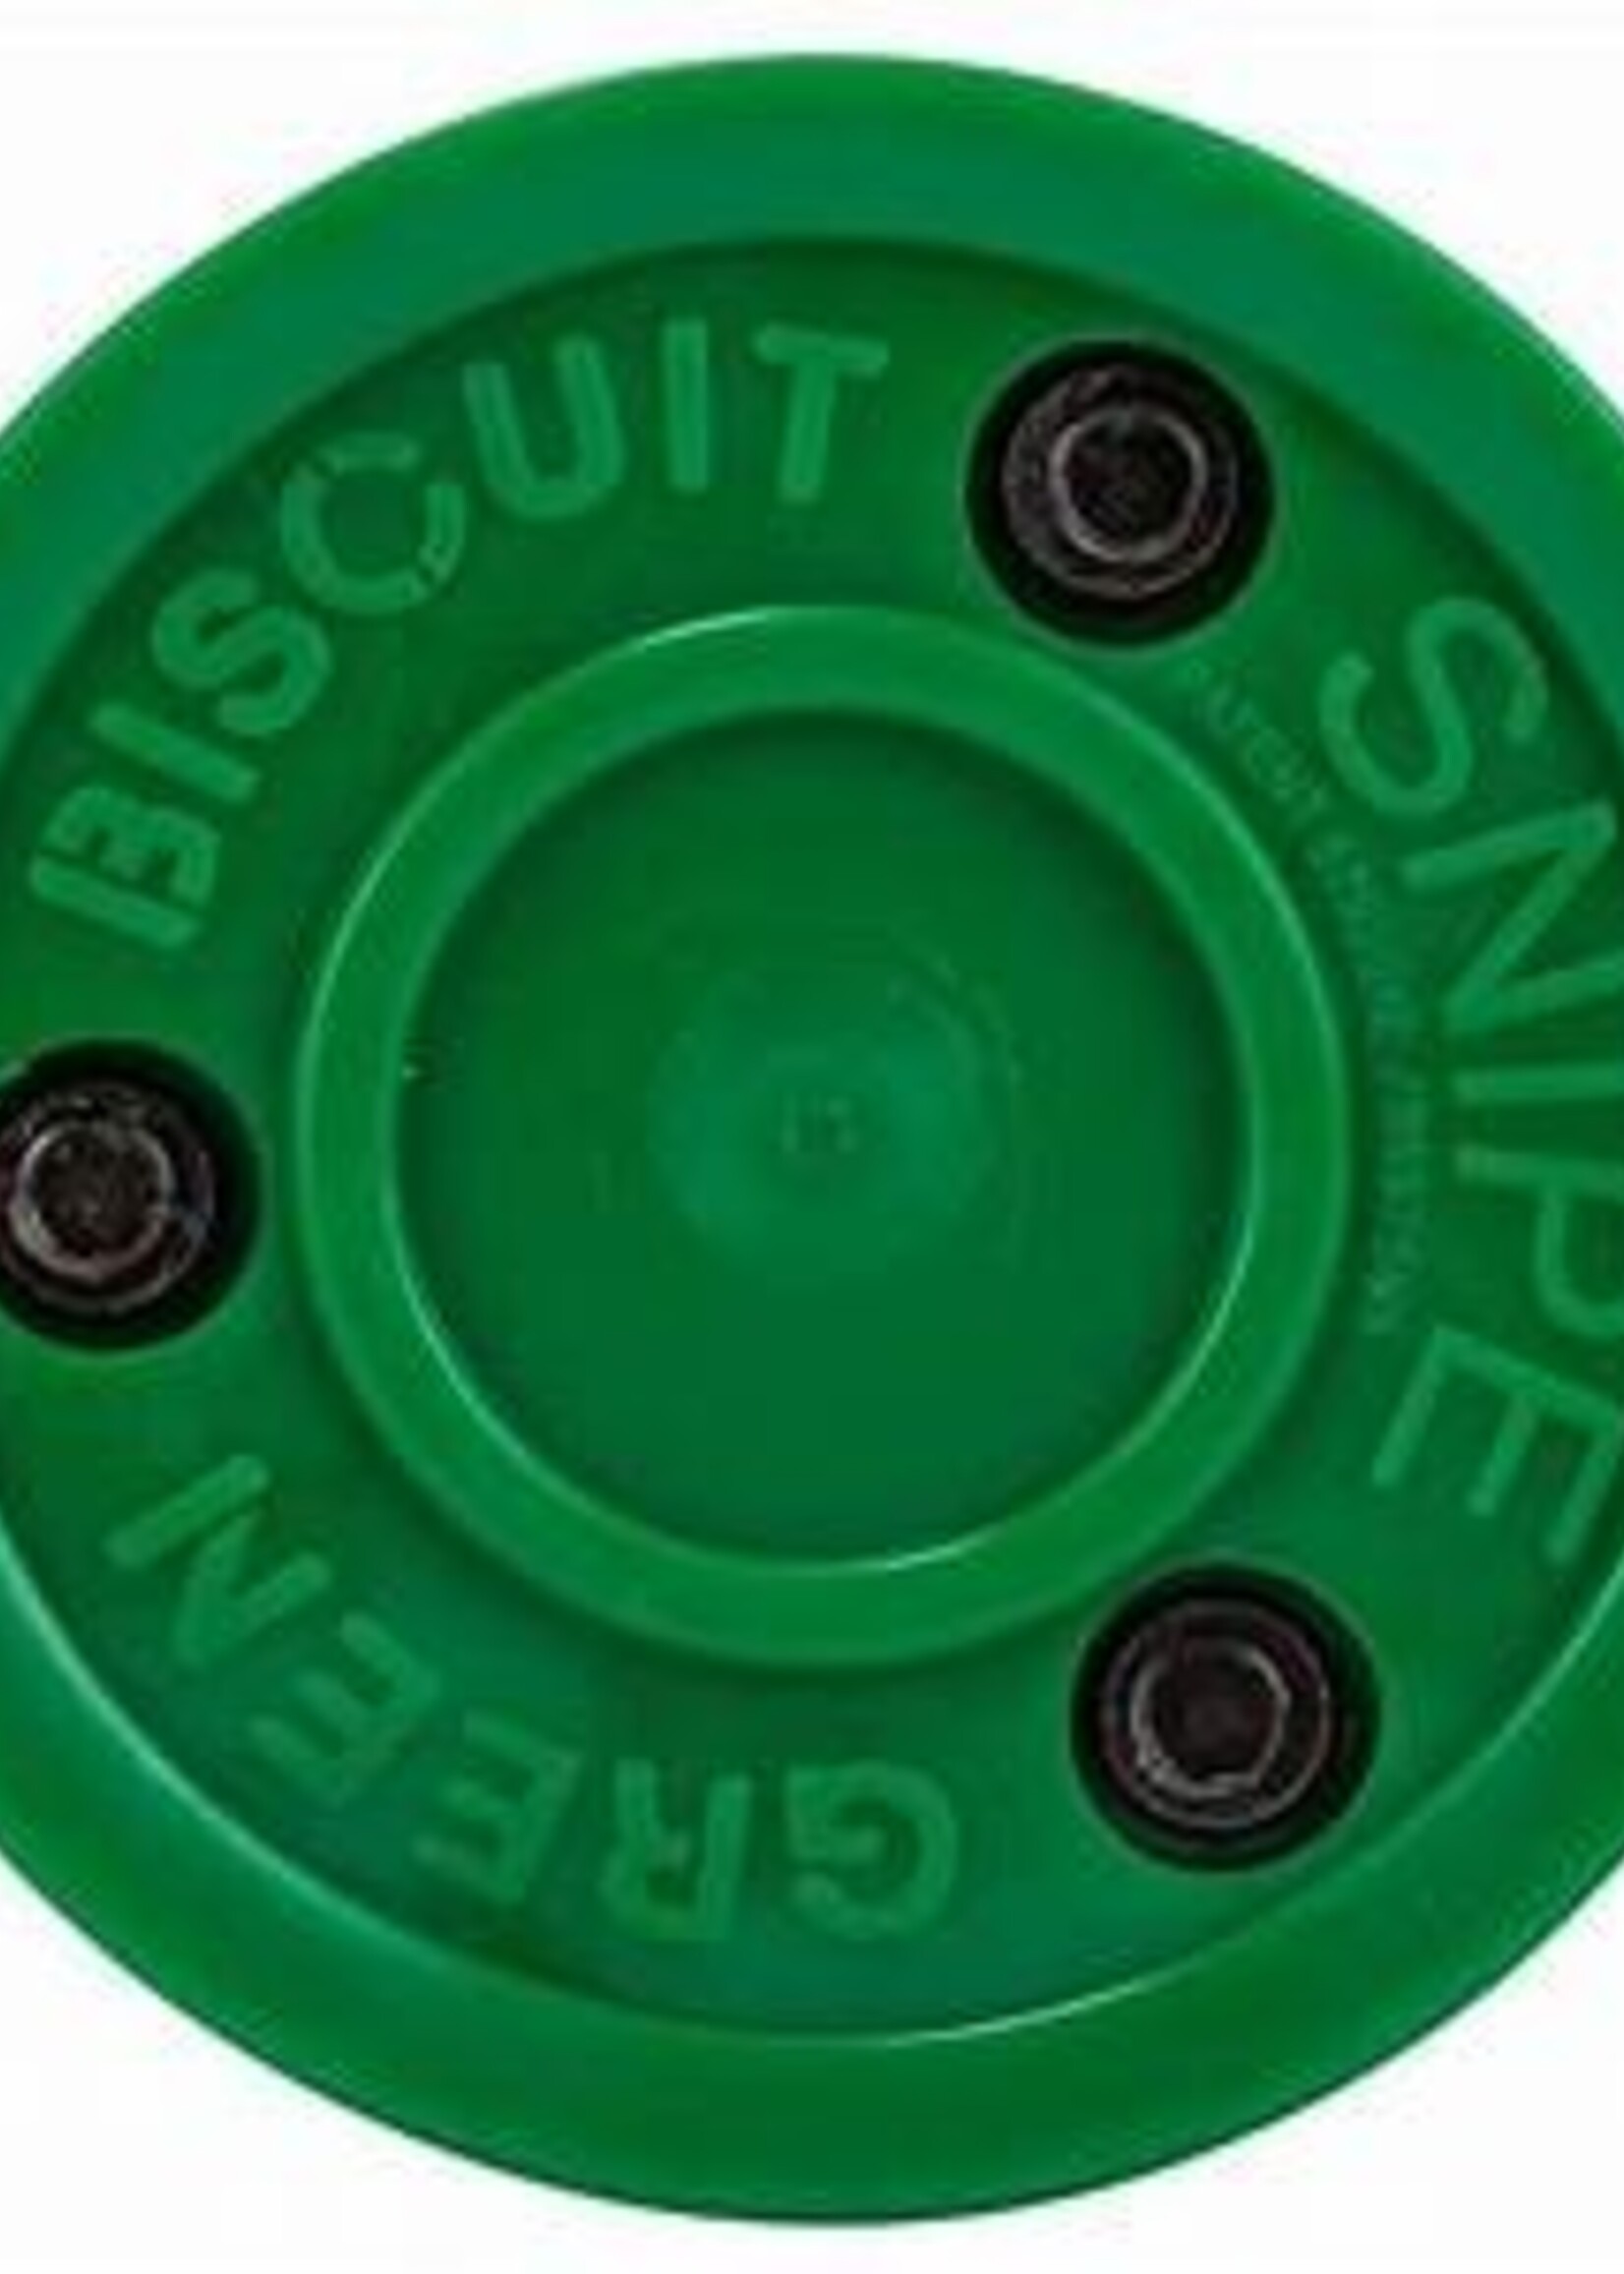 Green Biscuit Snipe